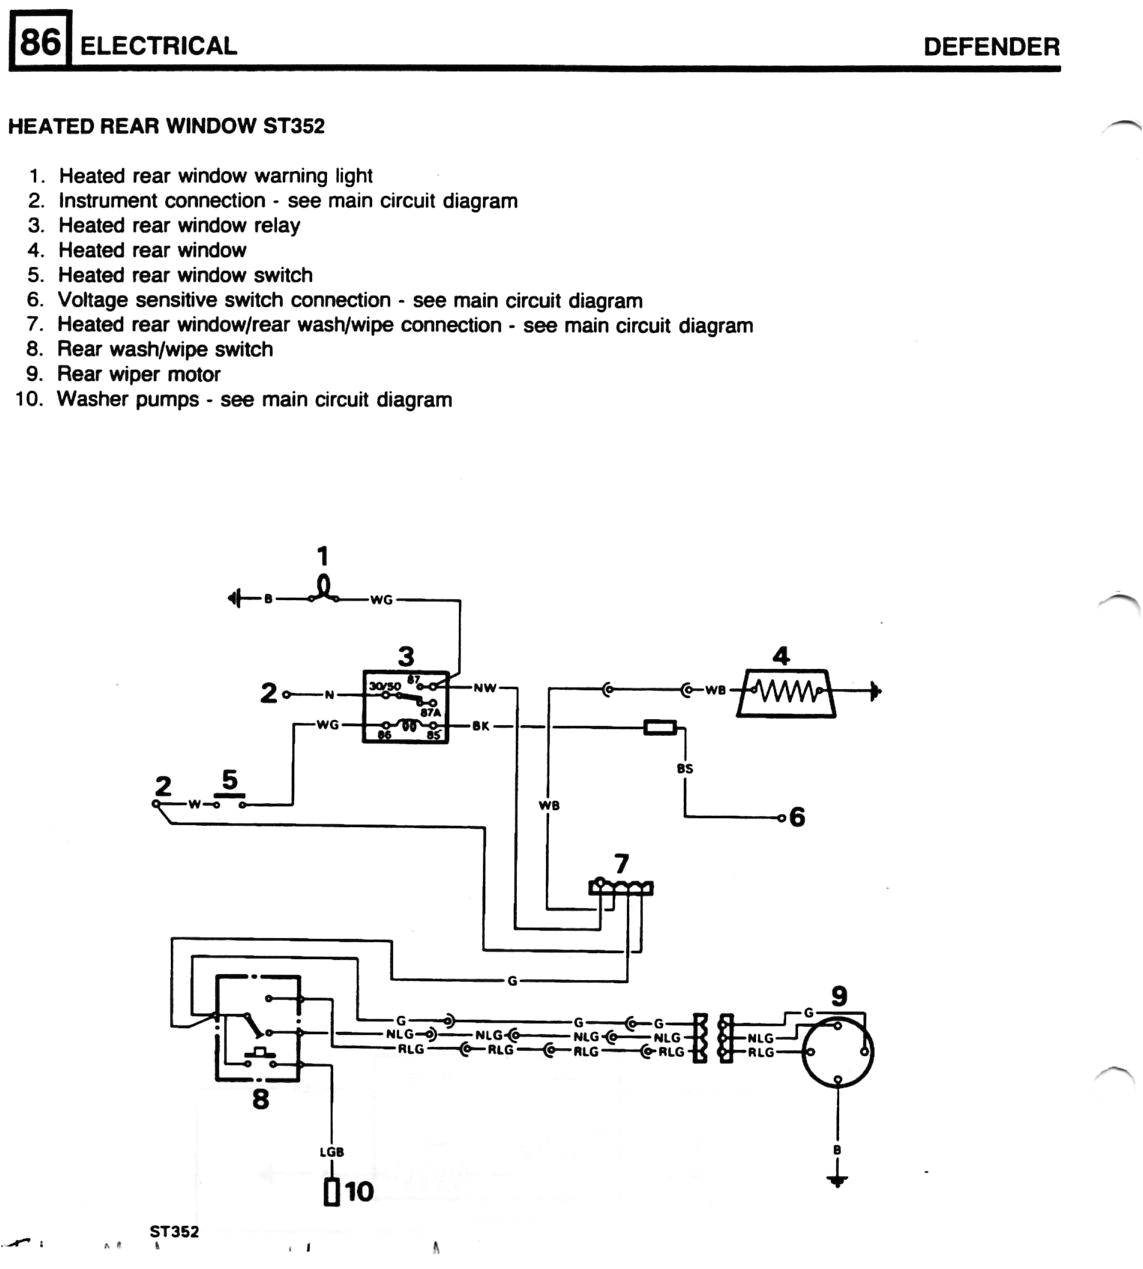 rear wiper wiring diagrams wiring diagram name defender rear wiper wiring diagram rear wiper wiring diagrams